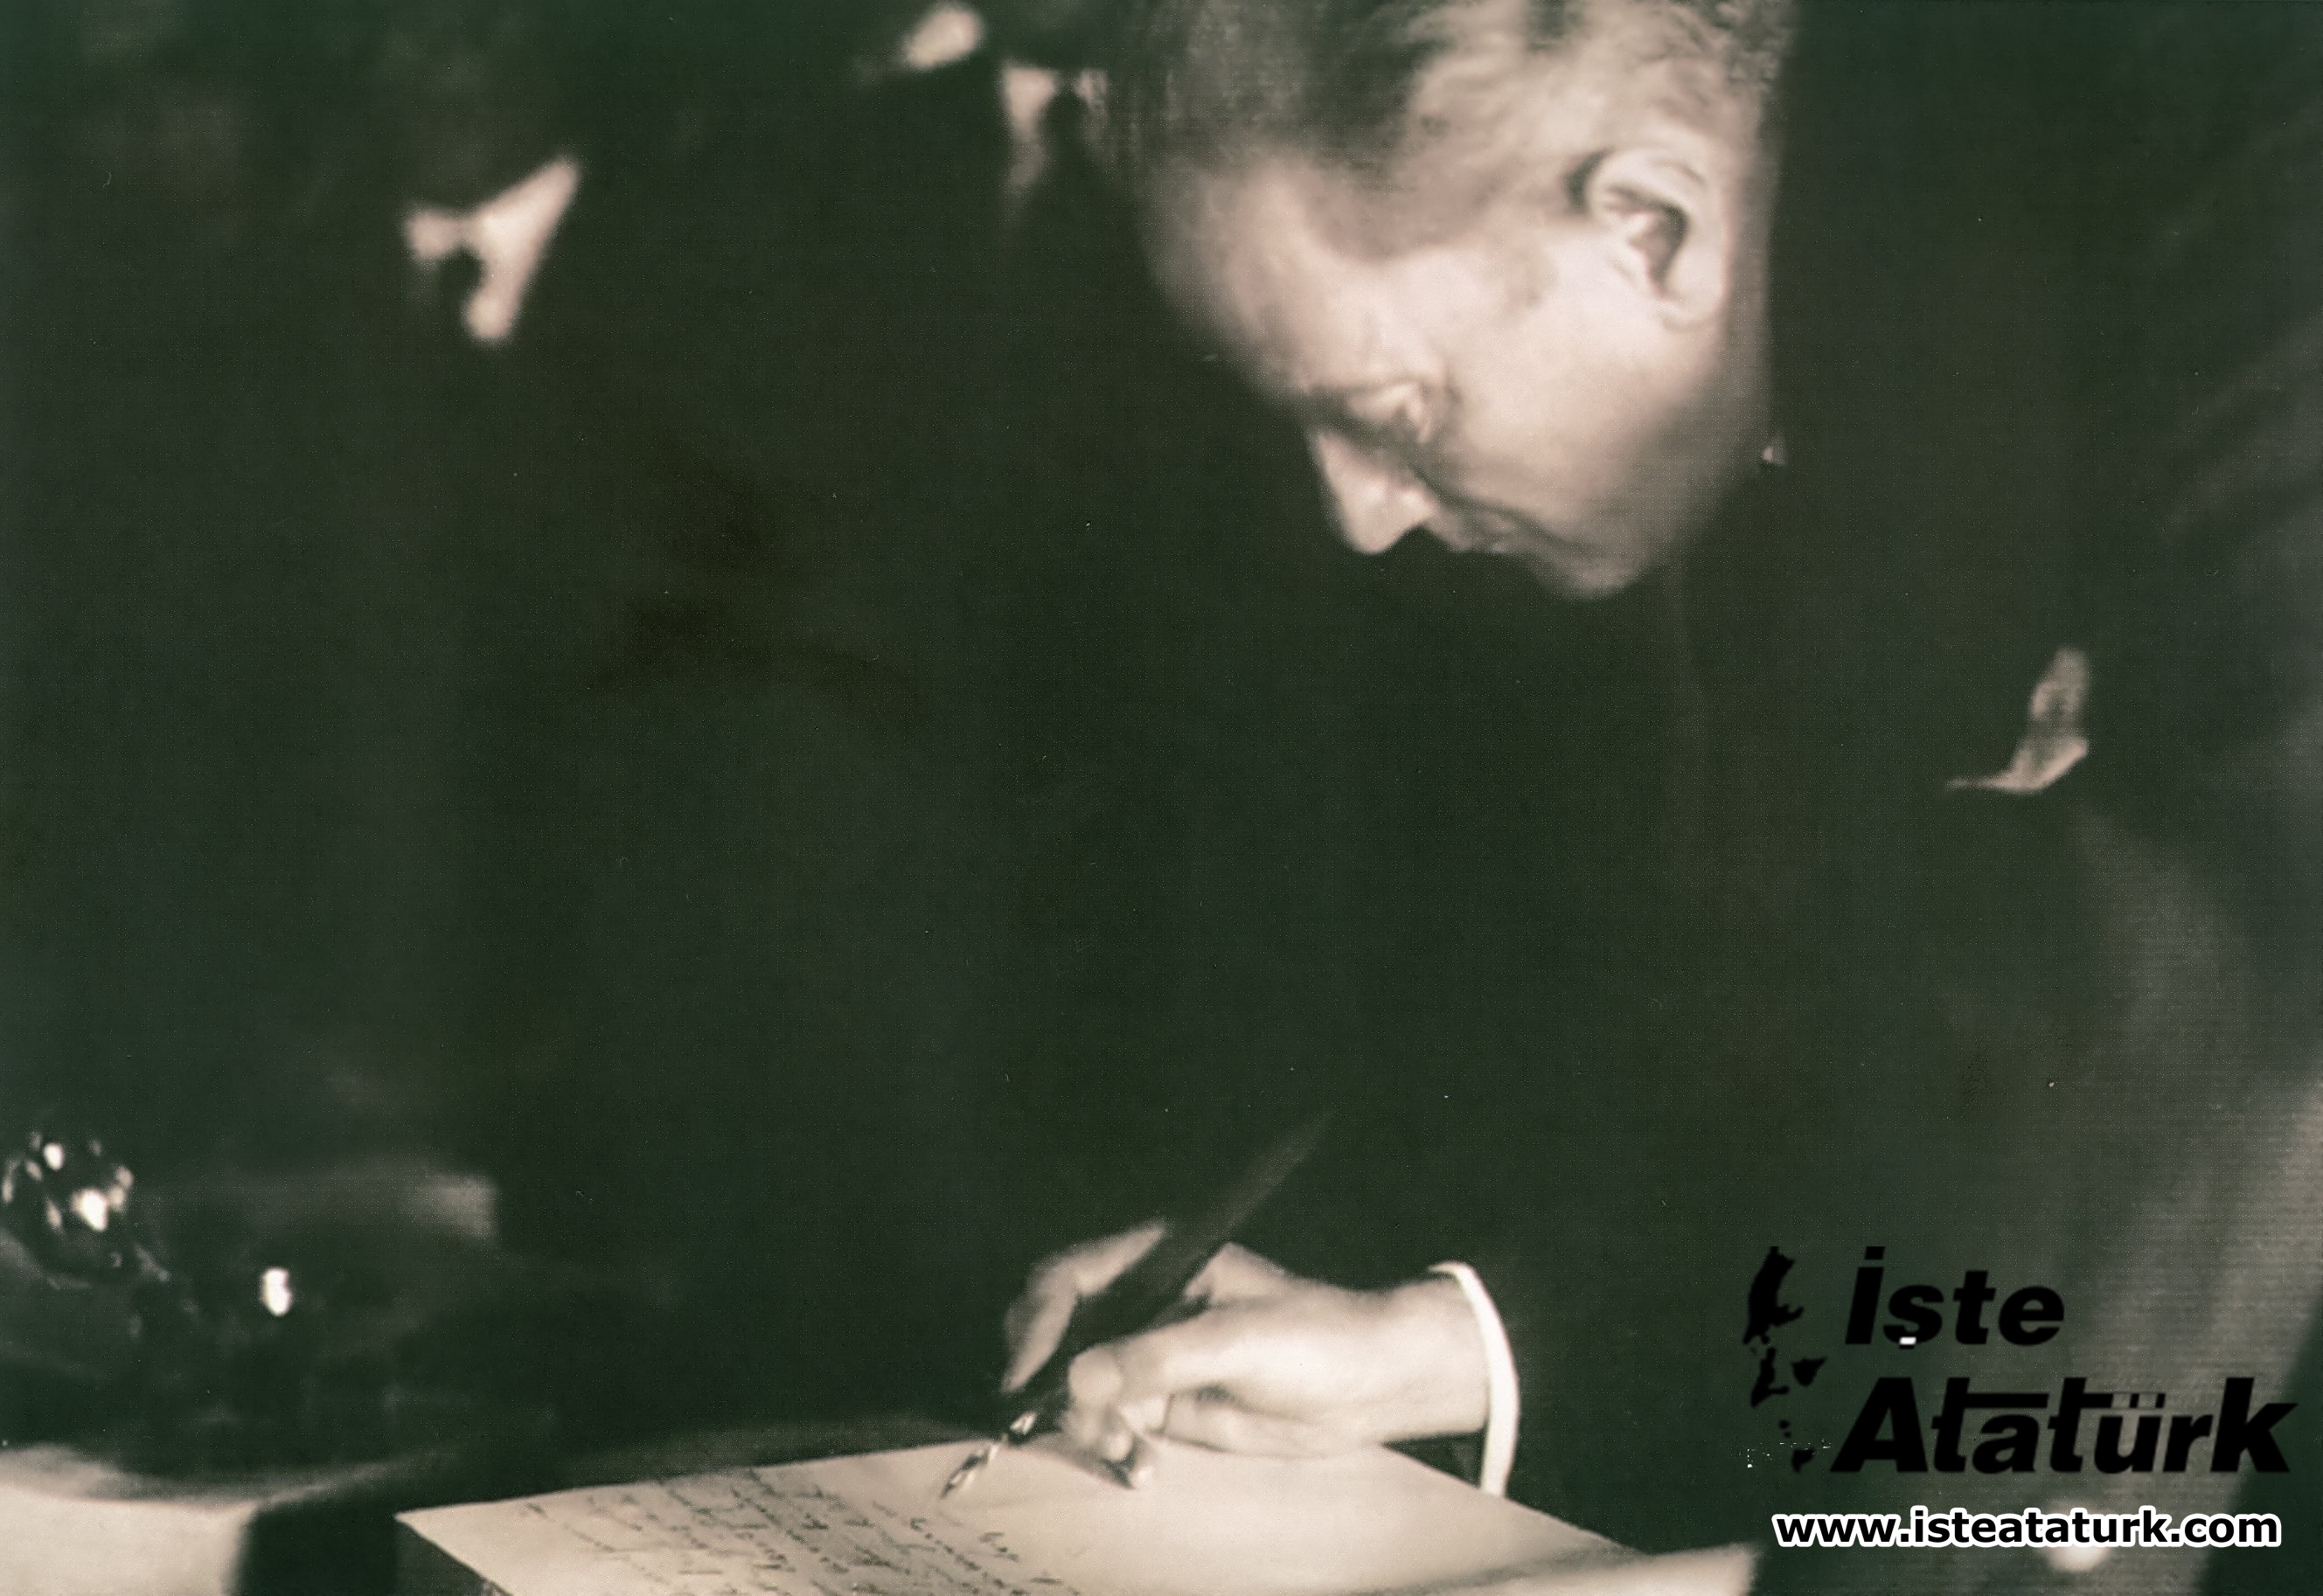 Atatürk's Principles